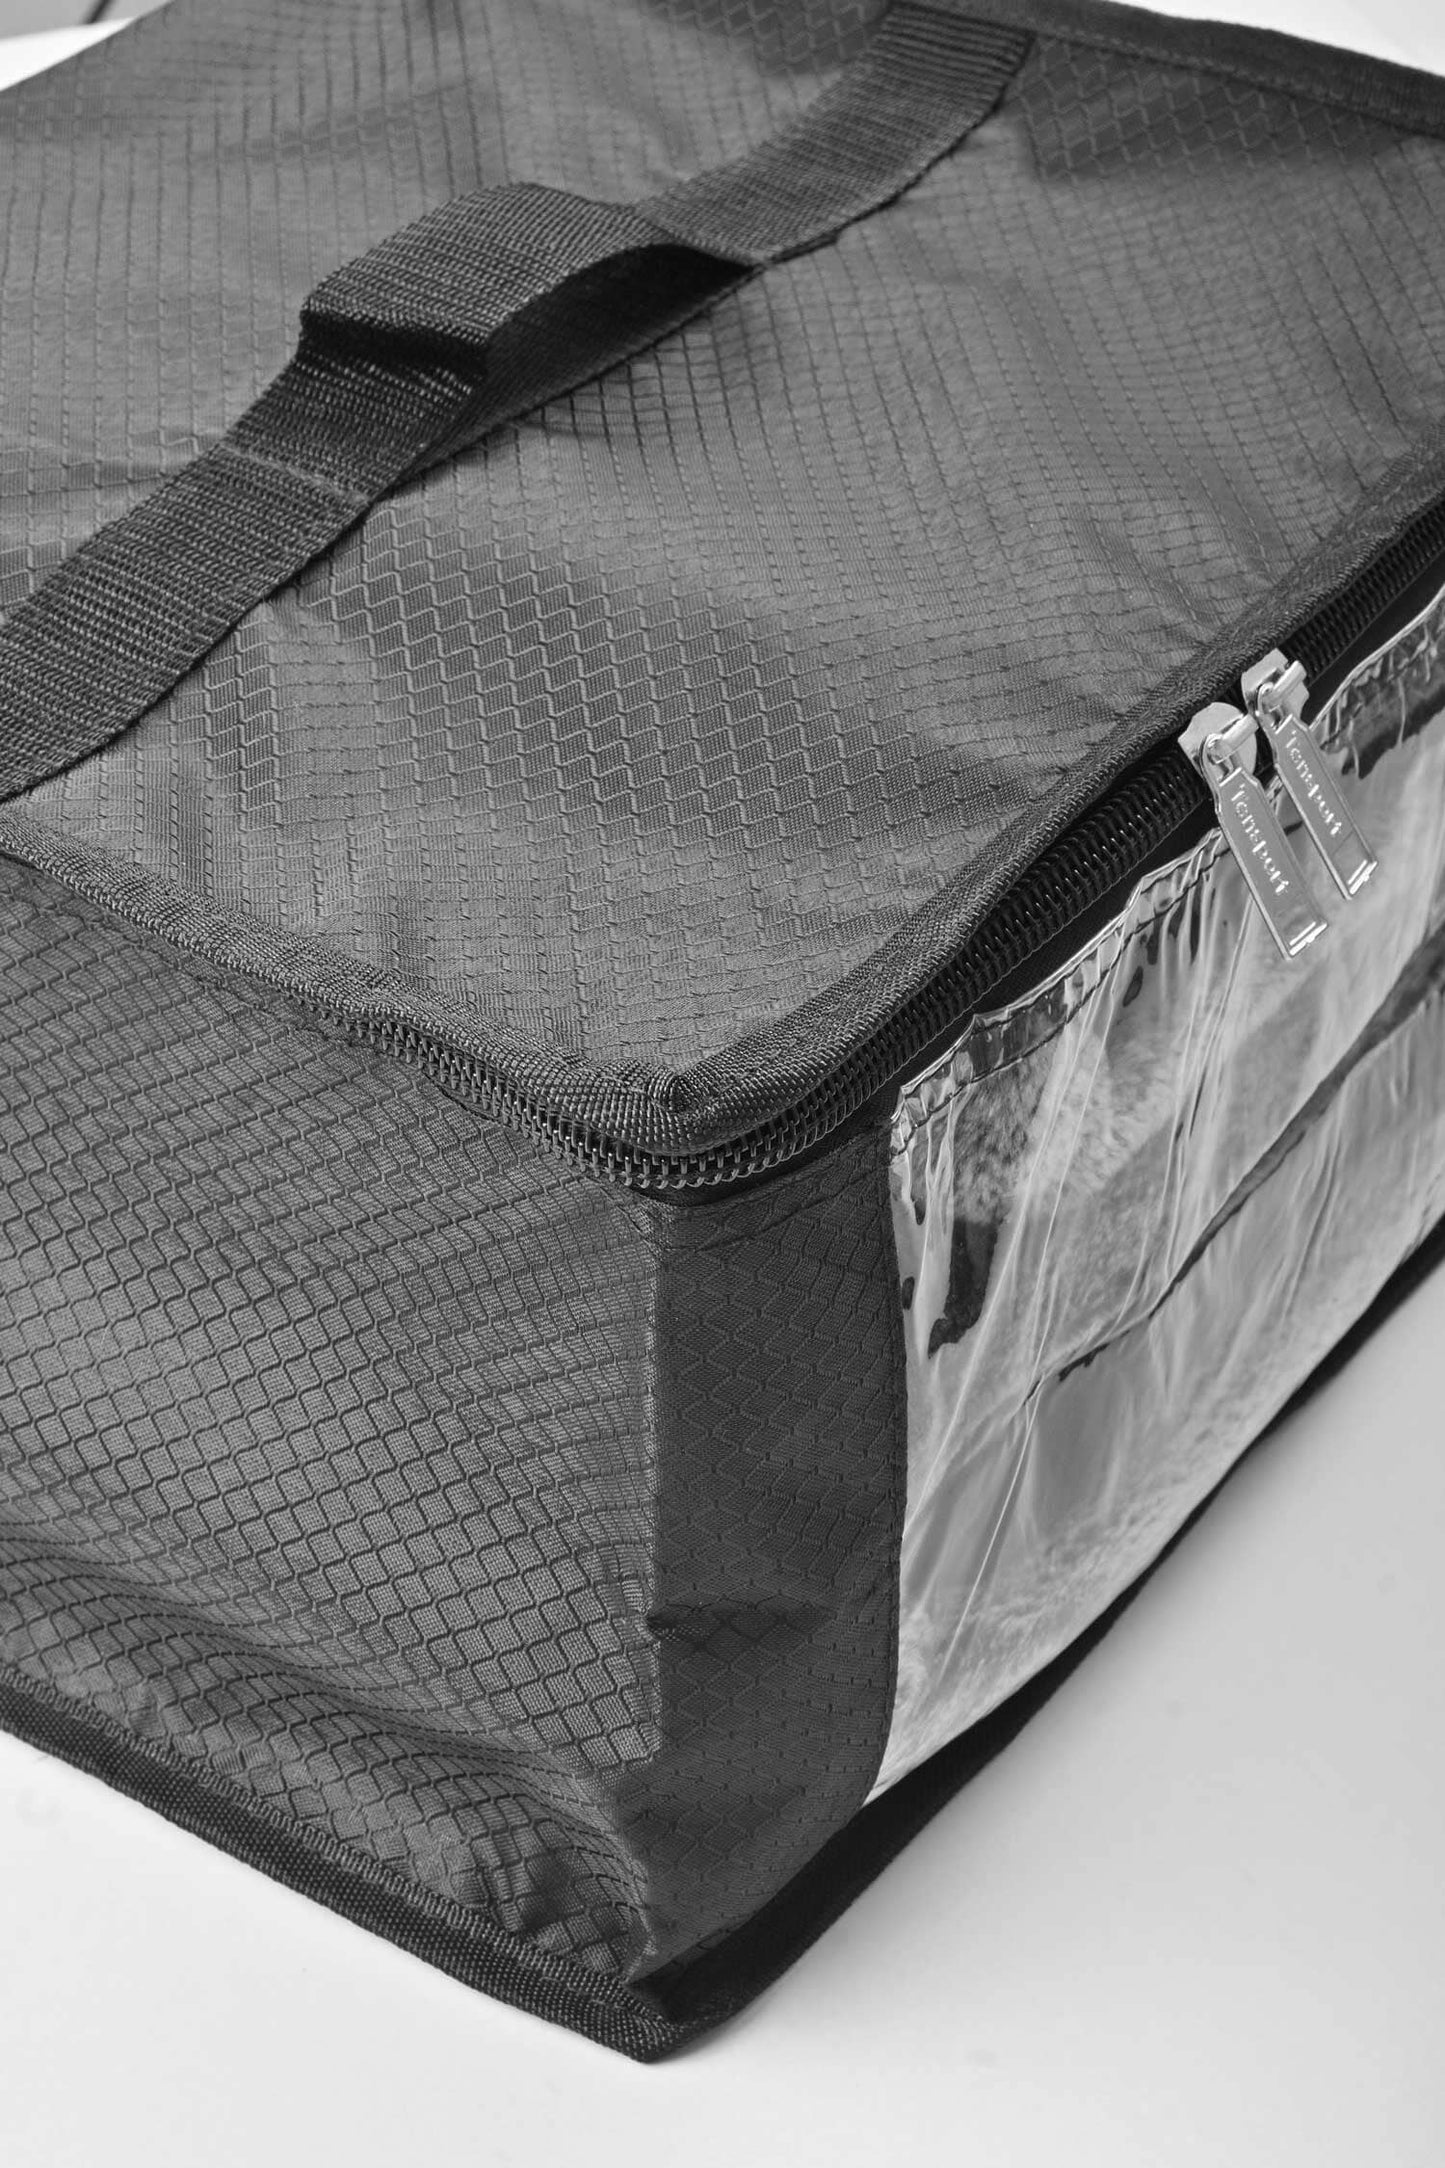 Tensport Home Storage Organizer Bag